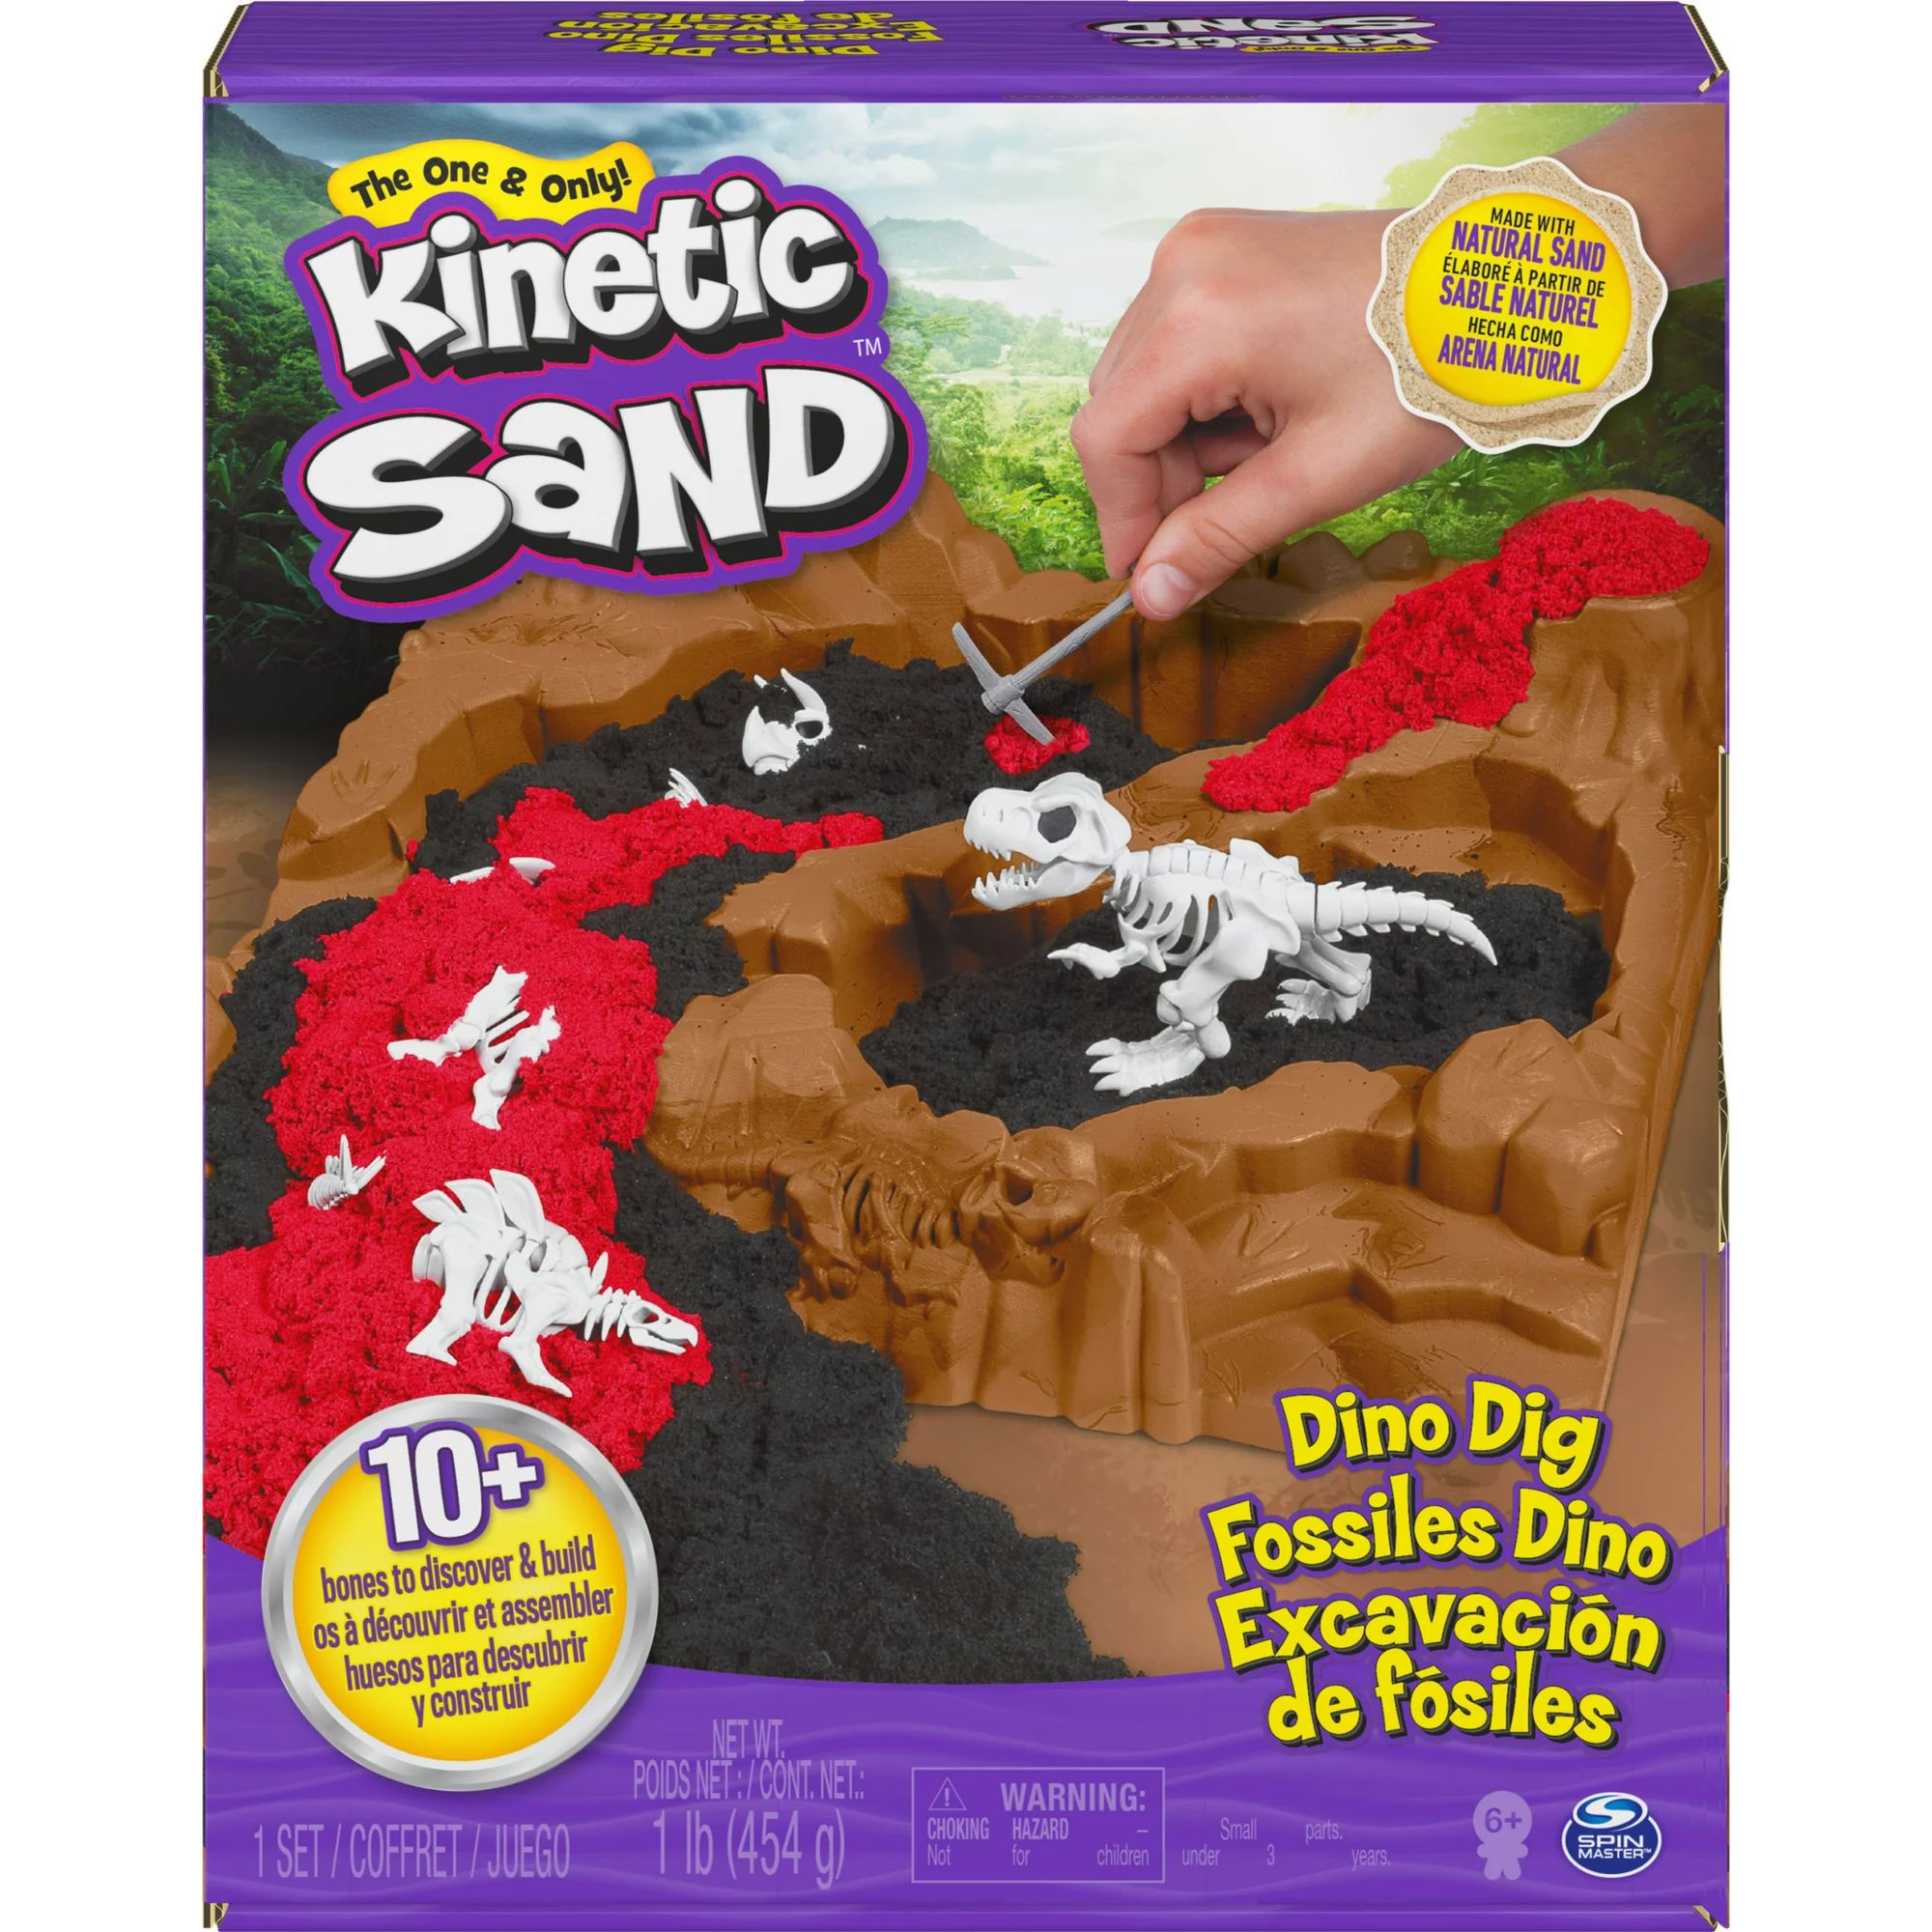 Kinetic Sand, Dino Dig Playset with 10 Hidden Dinosaur Bones, Play Sand Sensory Toys for Kids Age... | Walmart (US)